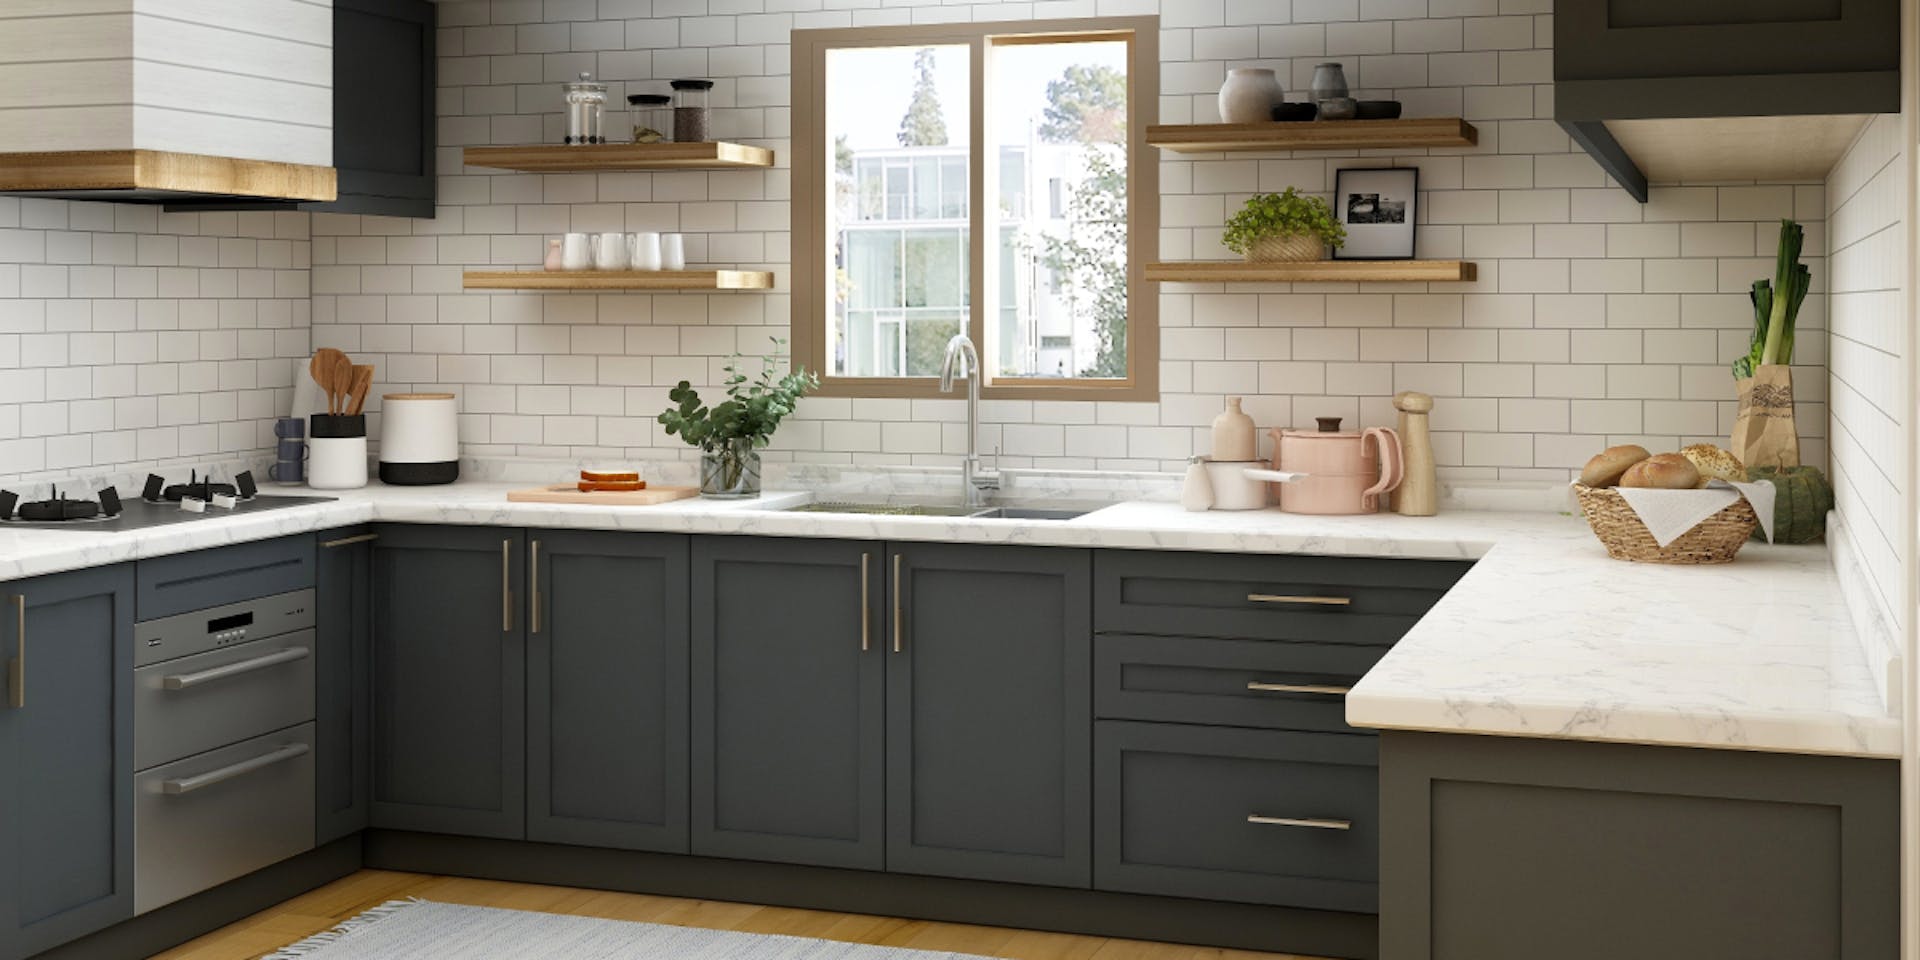 8 Kitchen Cabinet Paint Ideas To